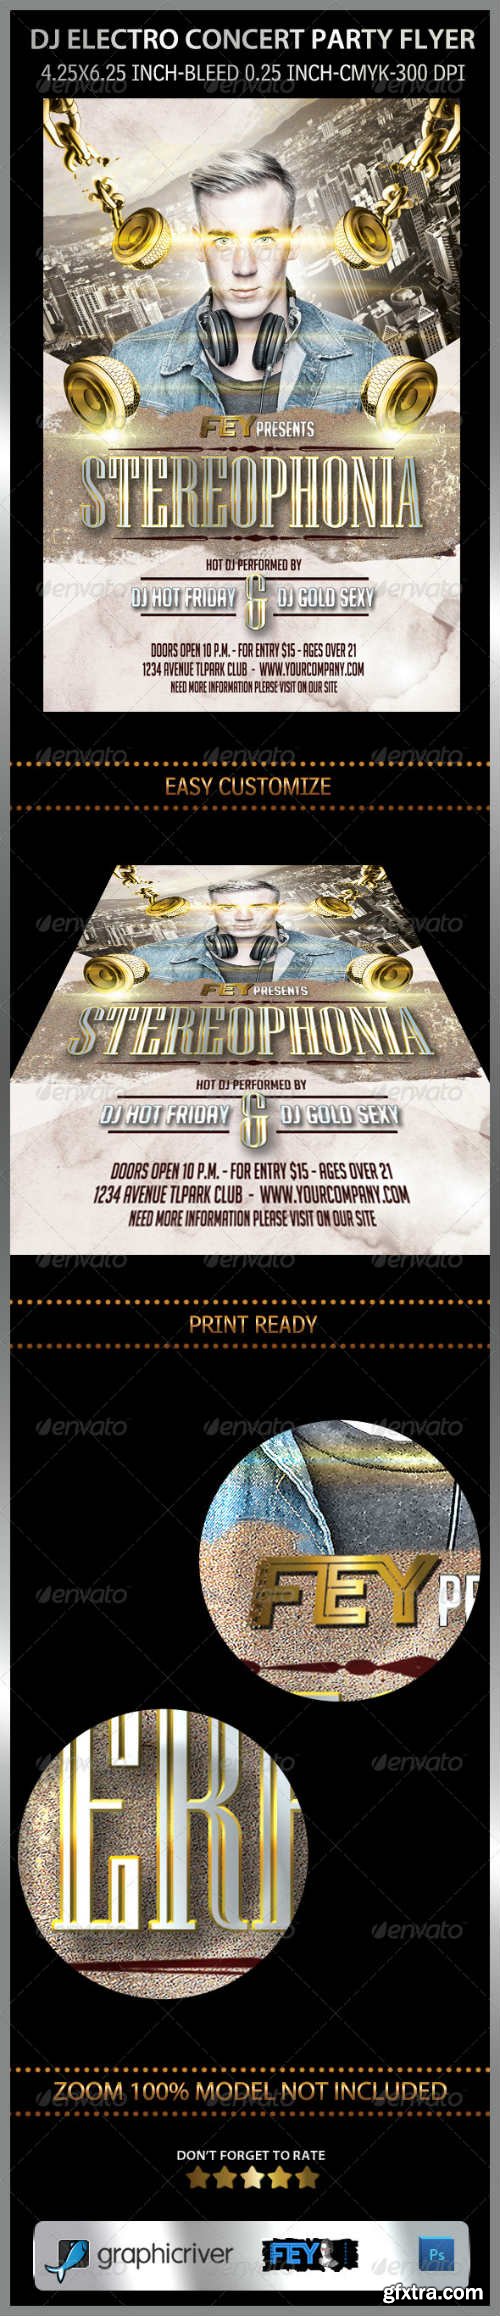 GR - DJ Electro Concert Party Flyer 7896417